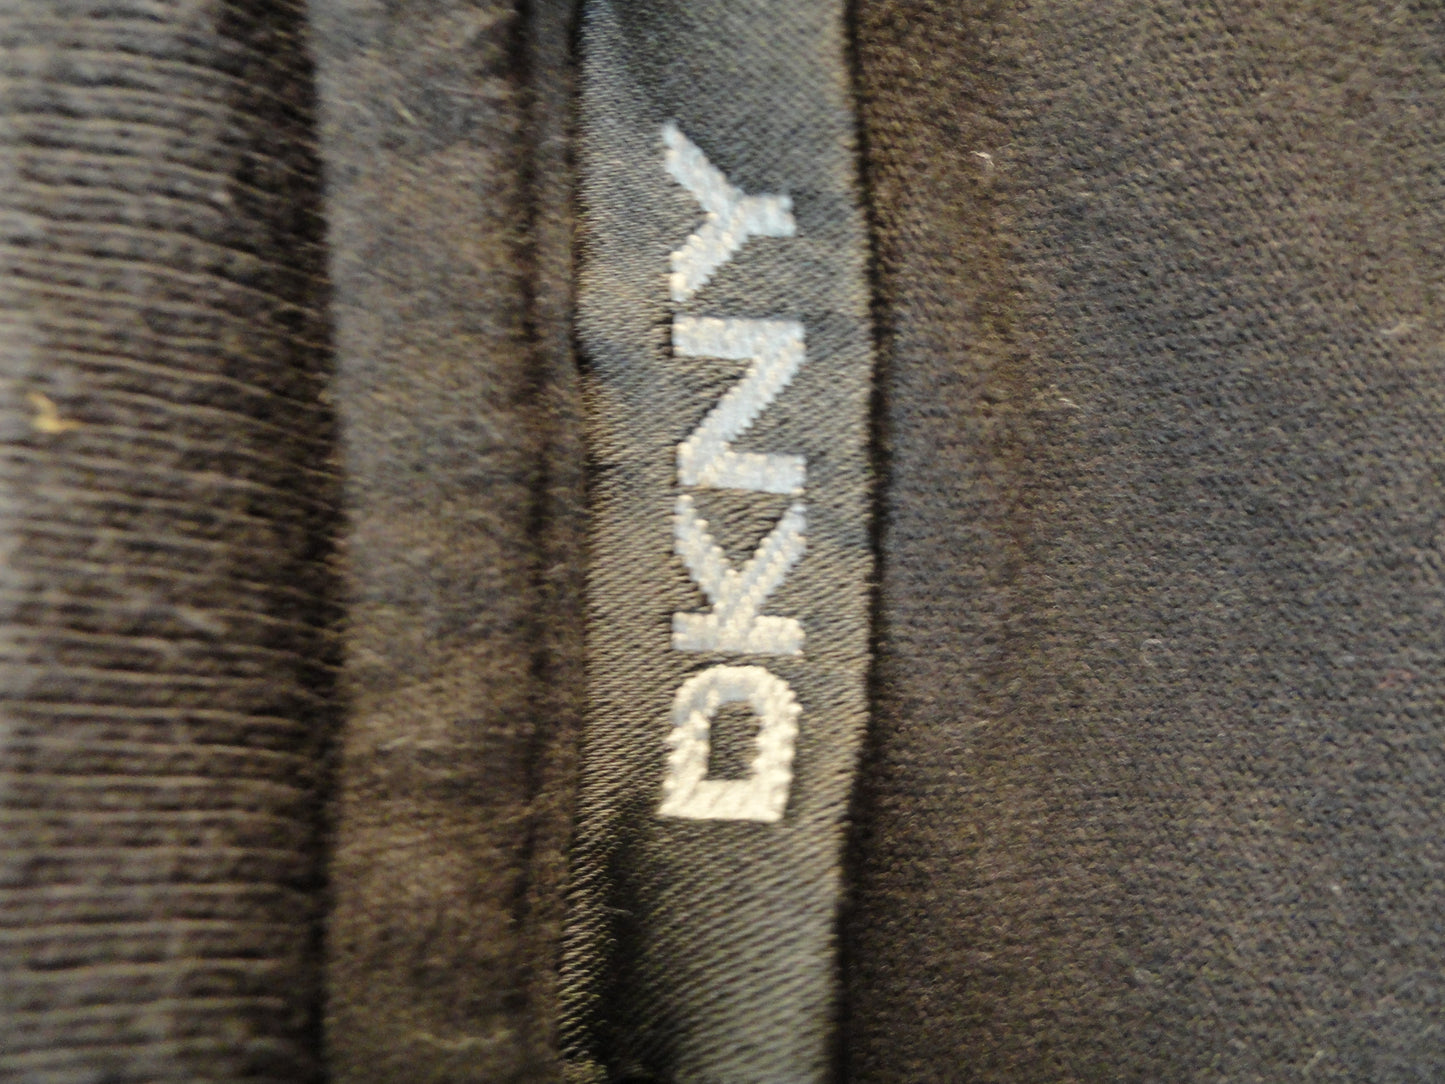 DKNY 70's Men's Black T-Shirt Size XL SKU 000162